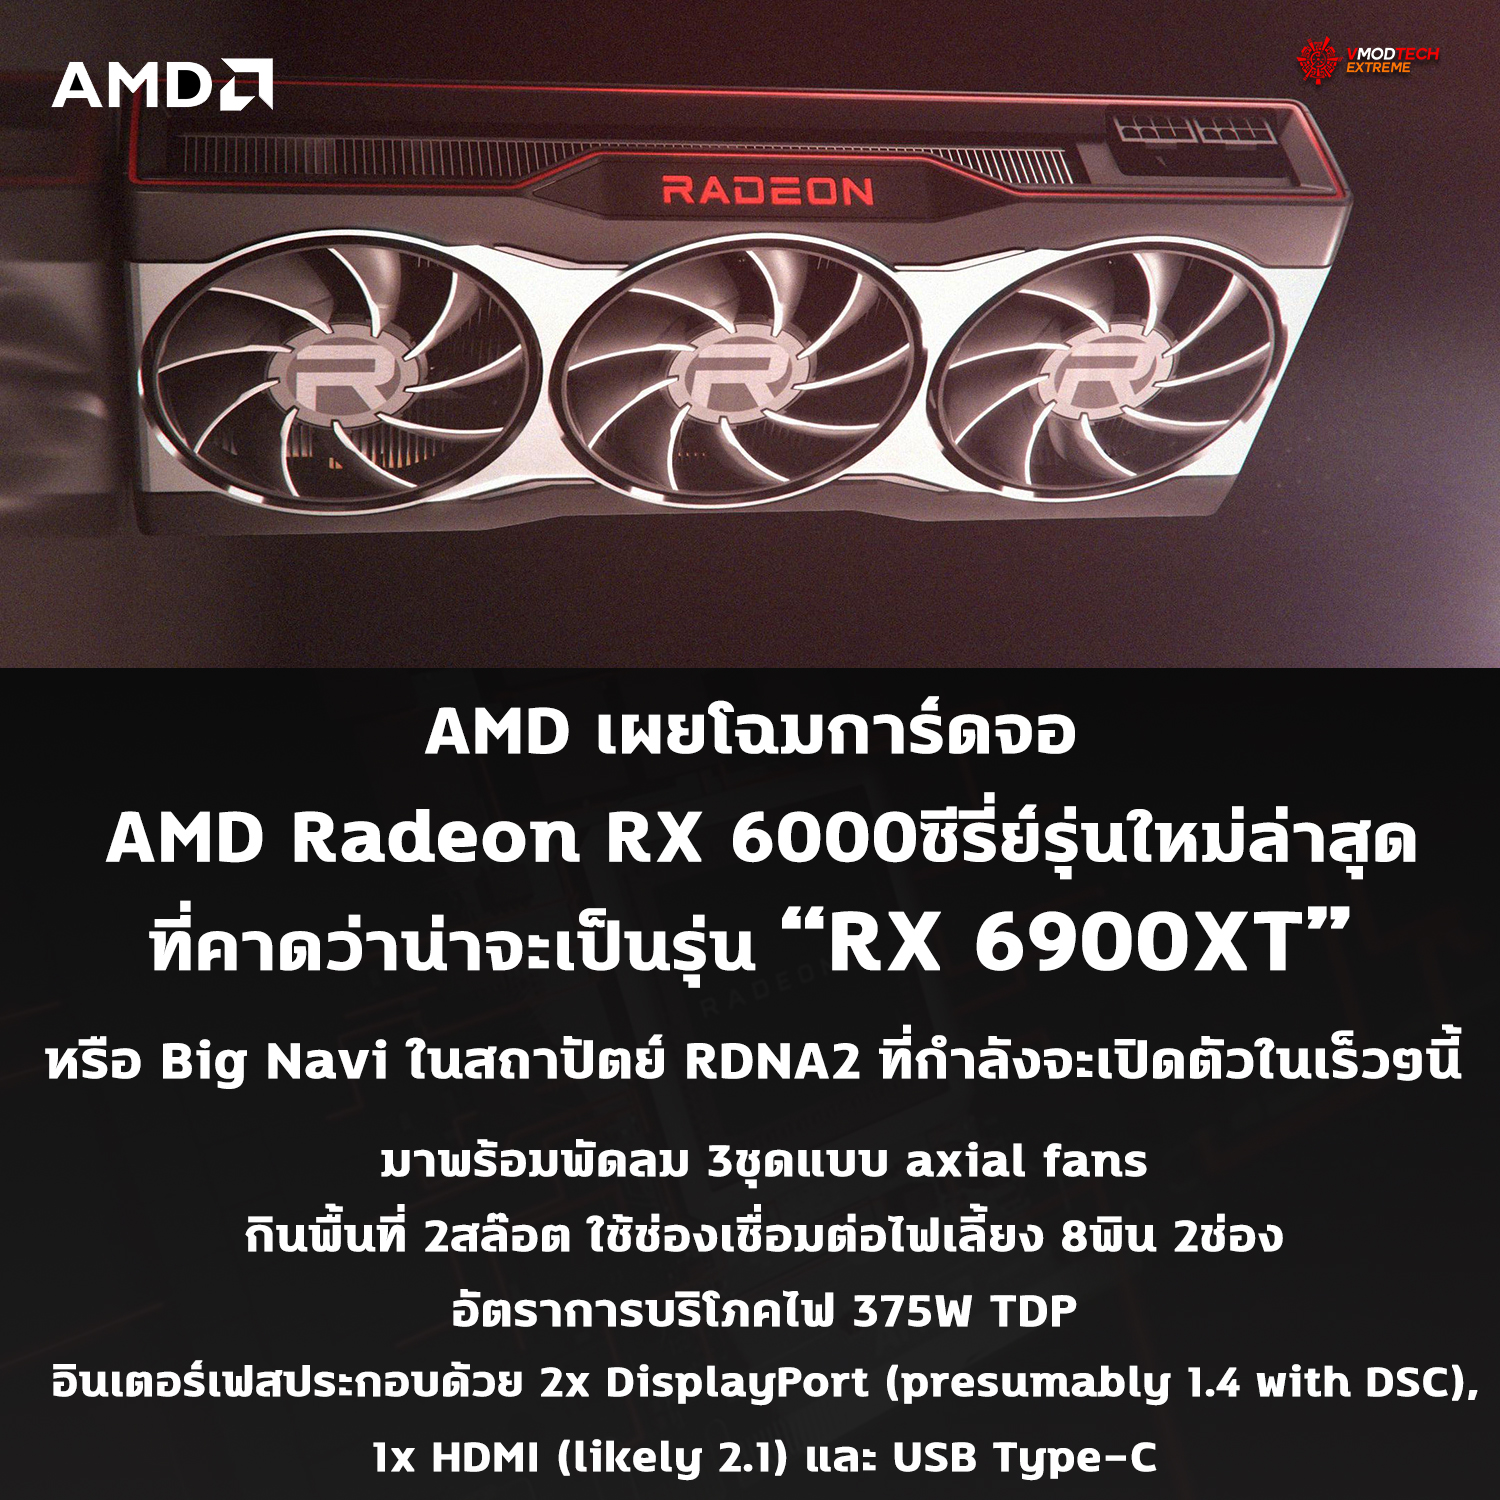 AMD เผยโฉมการ์ดจอ AMD Radeon RX 6000ซีรี่ย์รุ่นใหม่ล่าสุดที่คาดว่าน่าจะเป็นรุ่น RX 6900XT หรือ Big Navi ในสถาปัตย์ RDNA2 ที่กำลังจะเปิดตัวในเร็วๆนี้ 